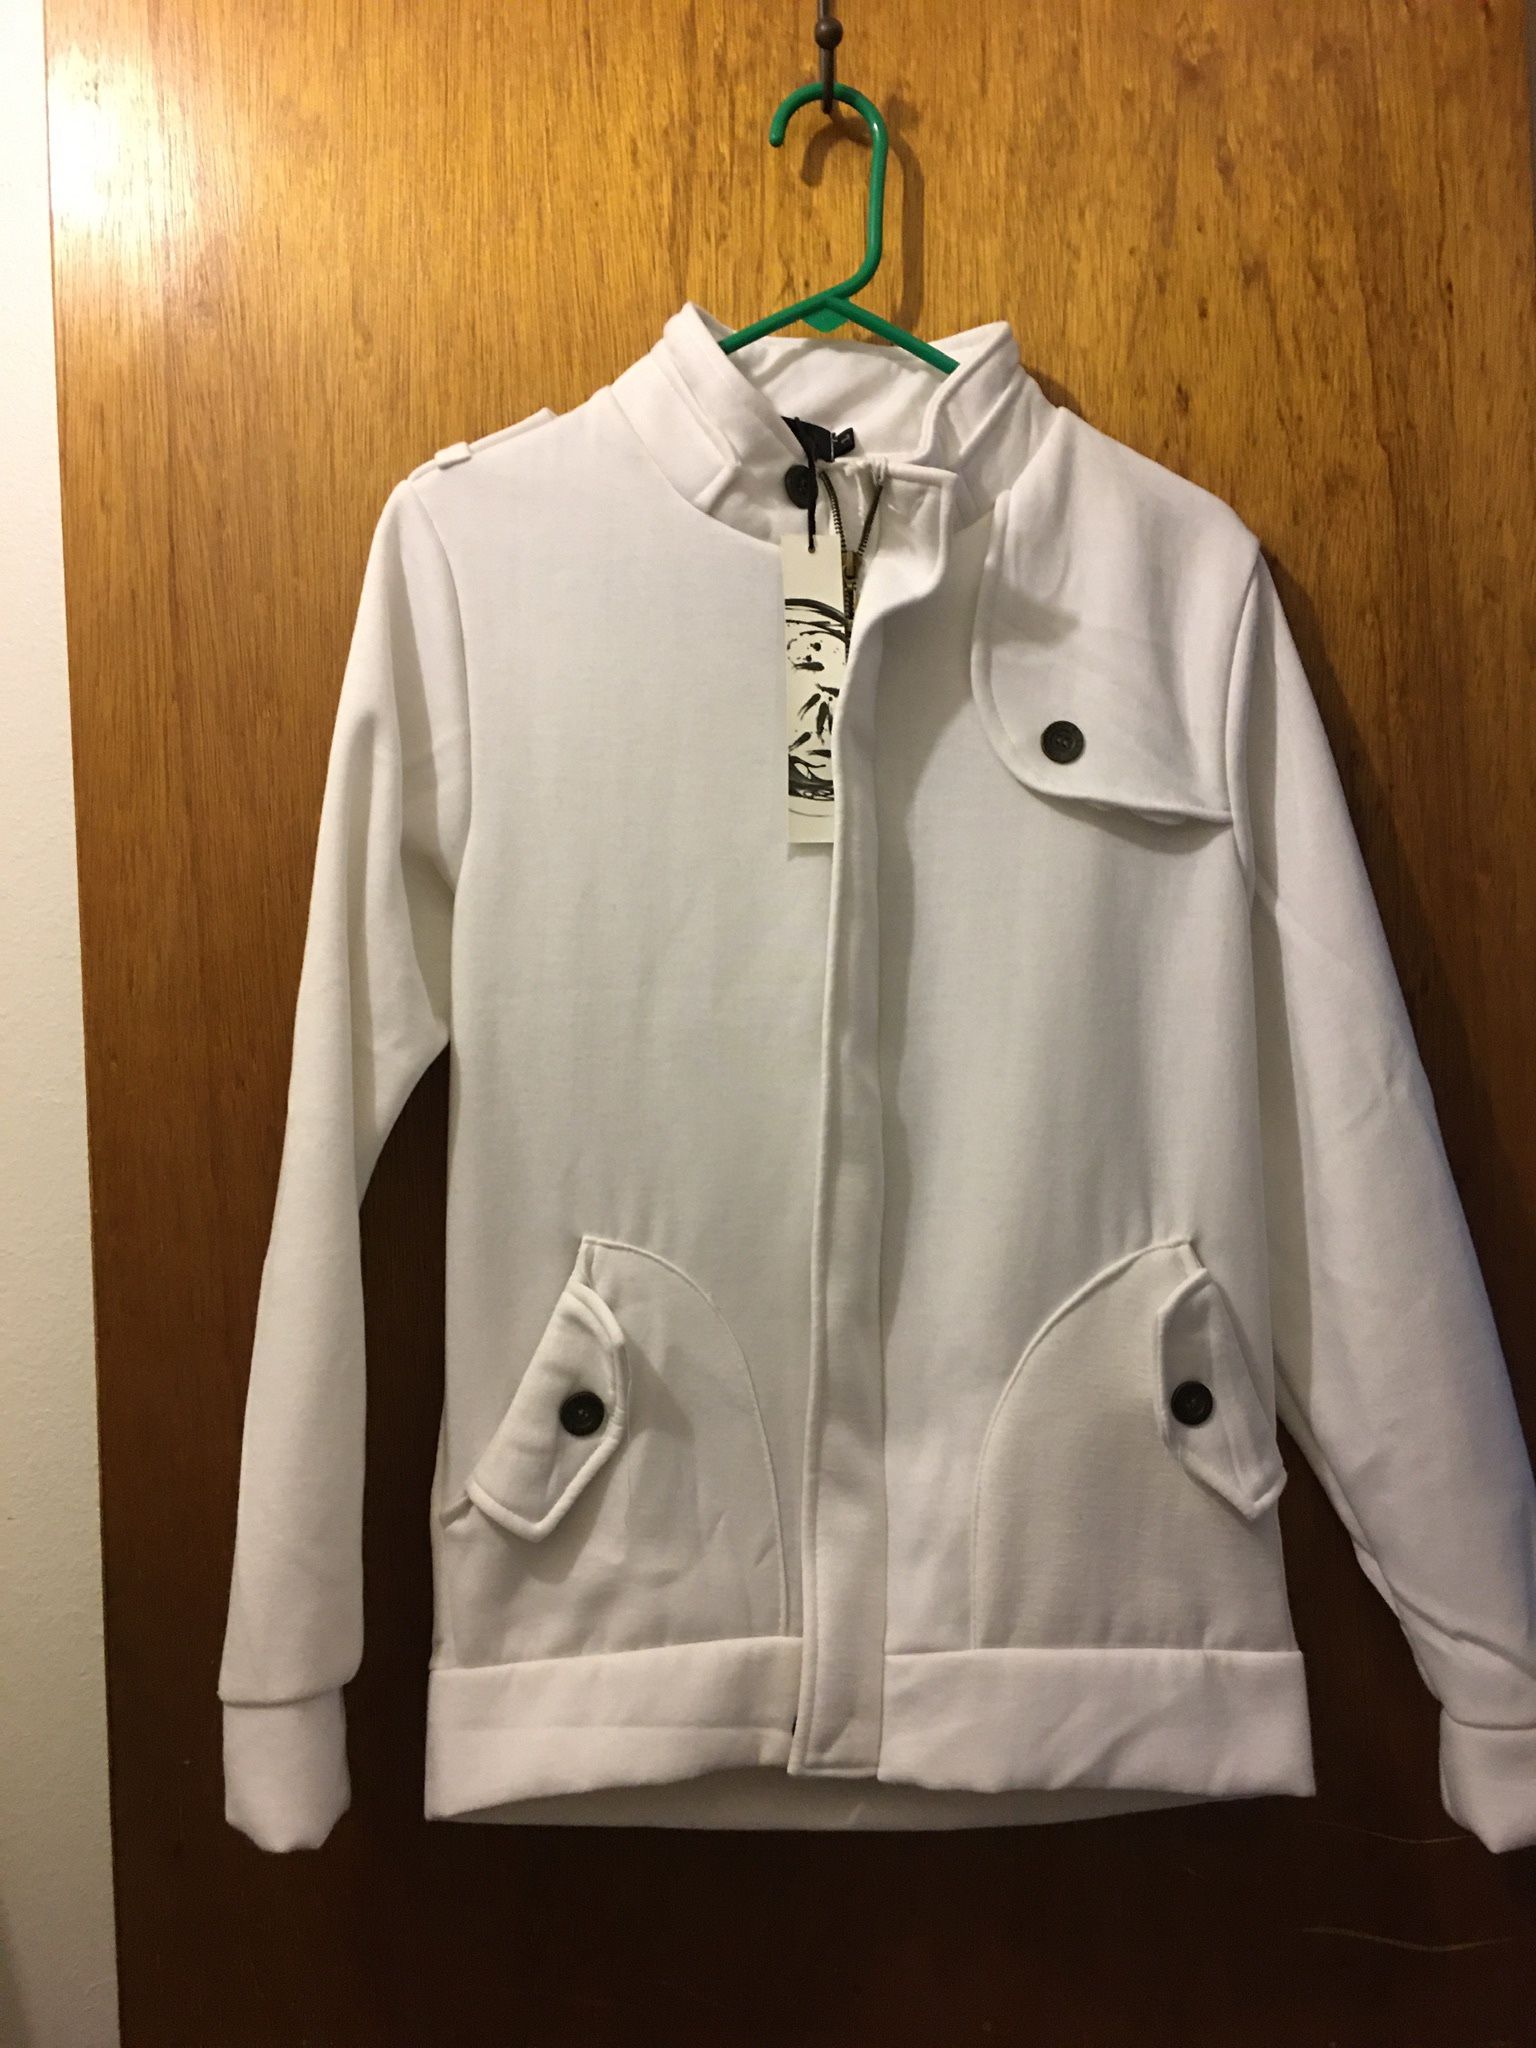 Warm Jacket 🧥 In White 